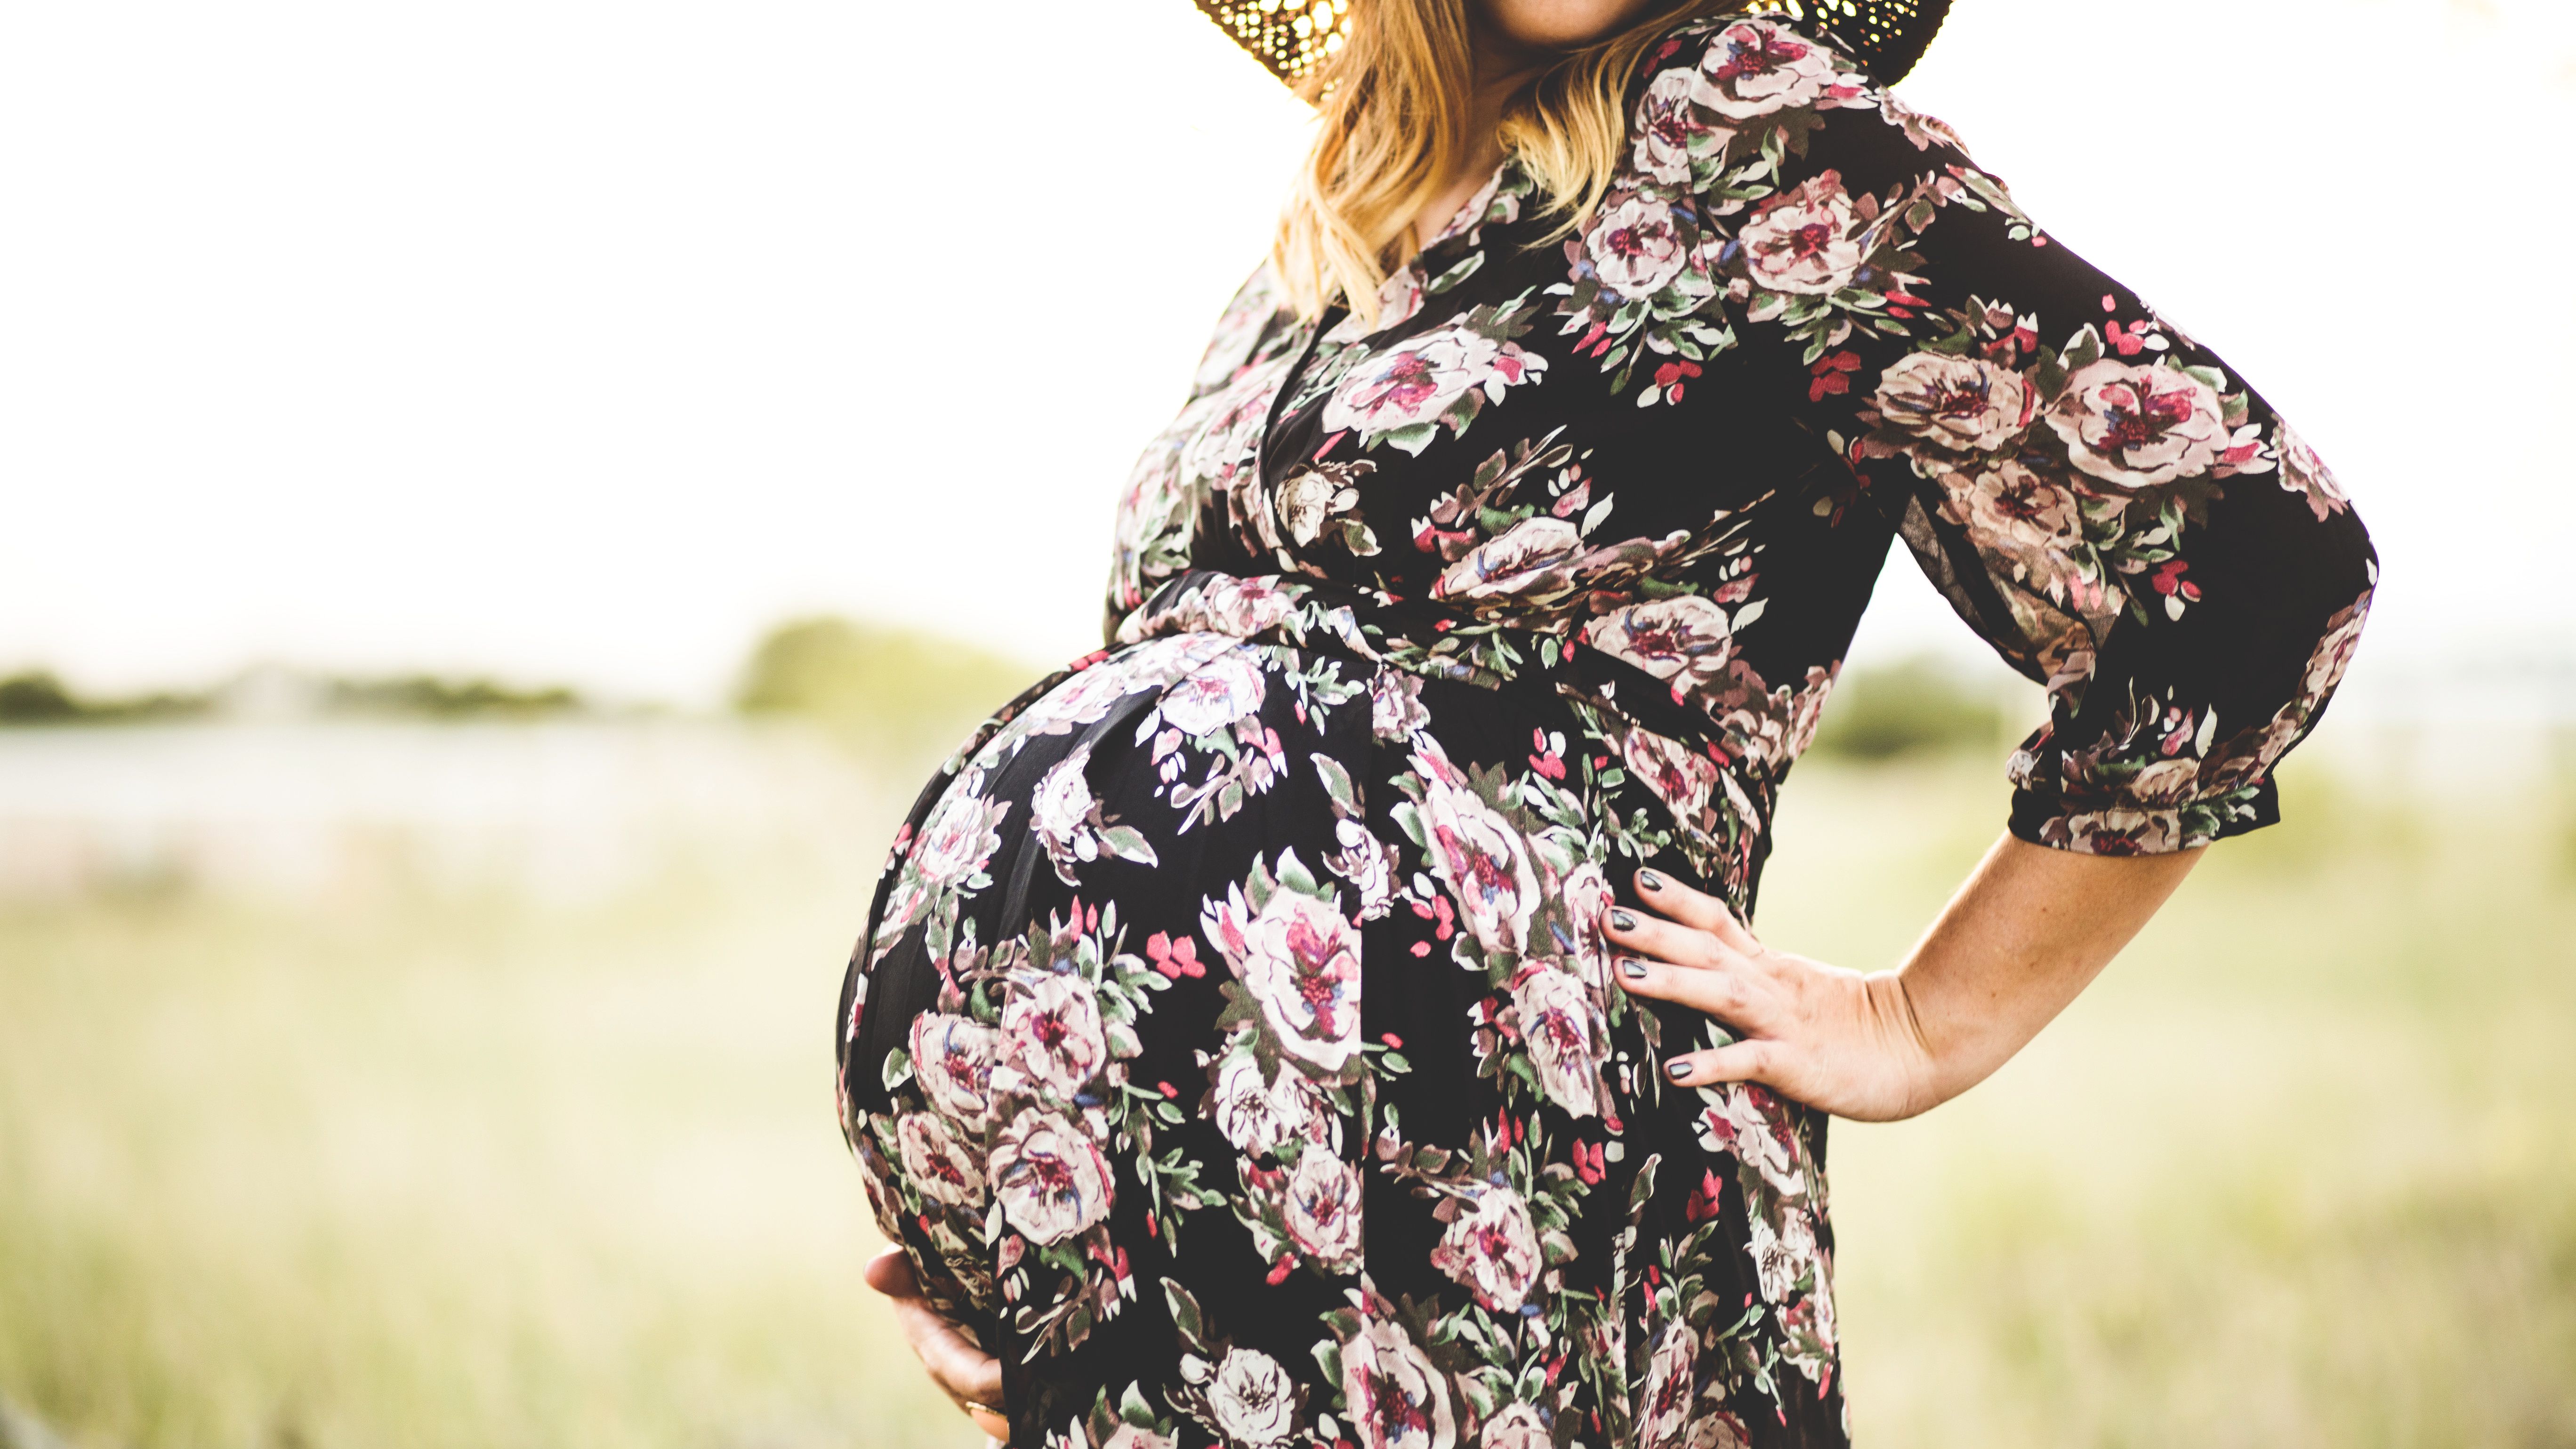 What Did Pregnant Ladies Wear?